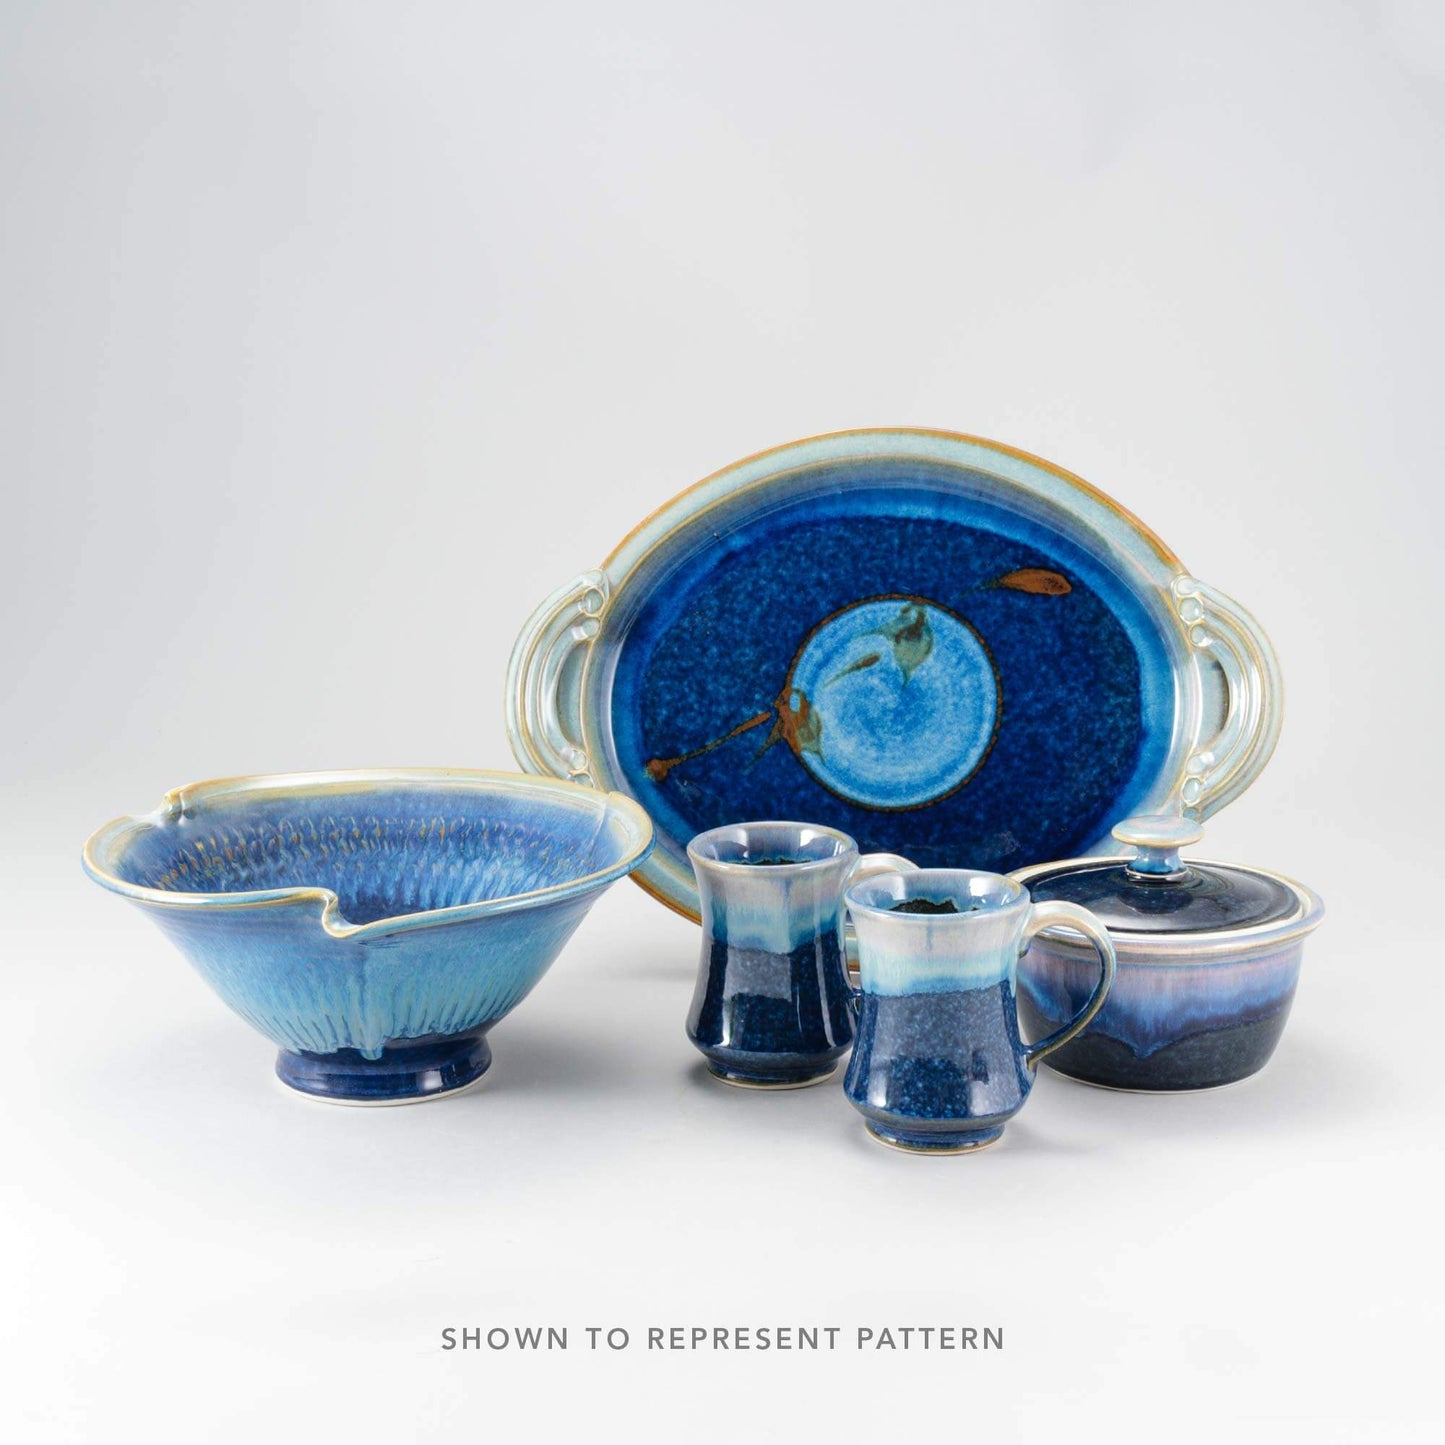 Handmade Pottery Handled Ramekin in Cobalt pattern made by Georgetown Pottery in Maine